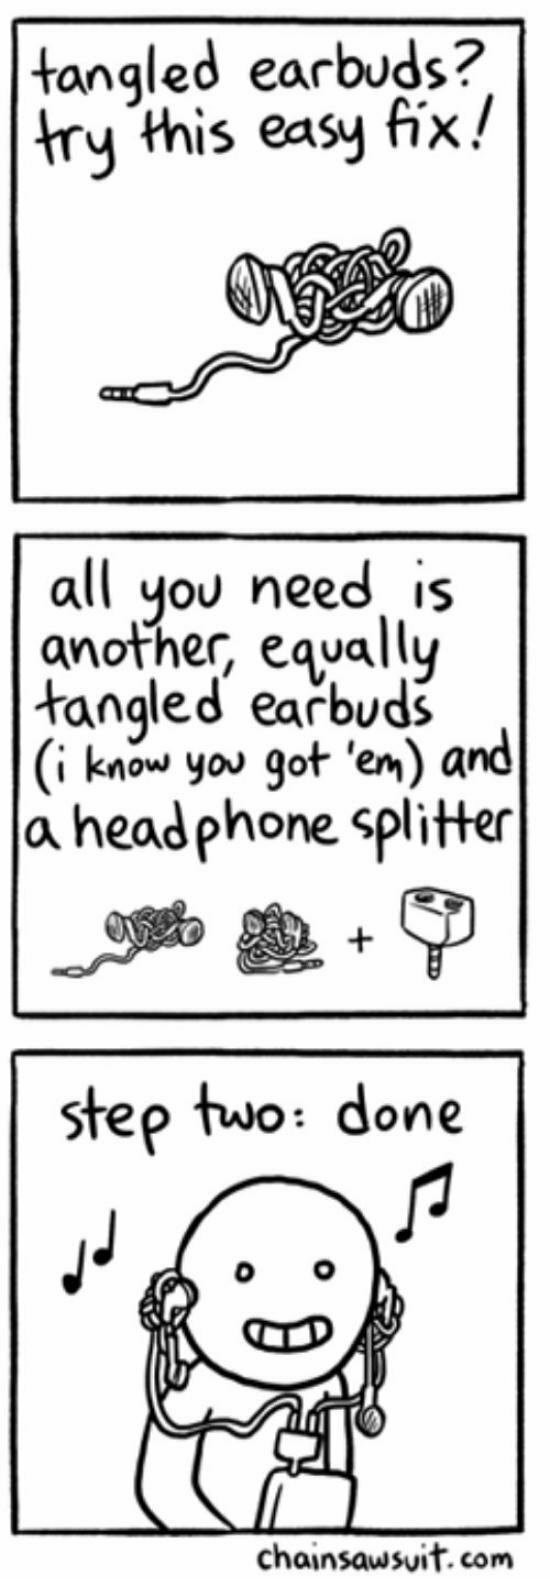 Tangle earphones fix - meme